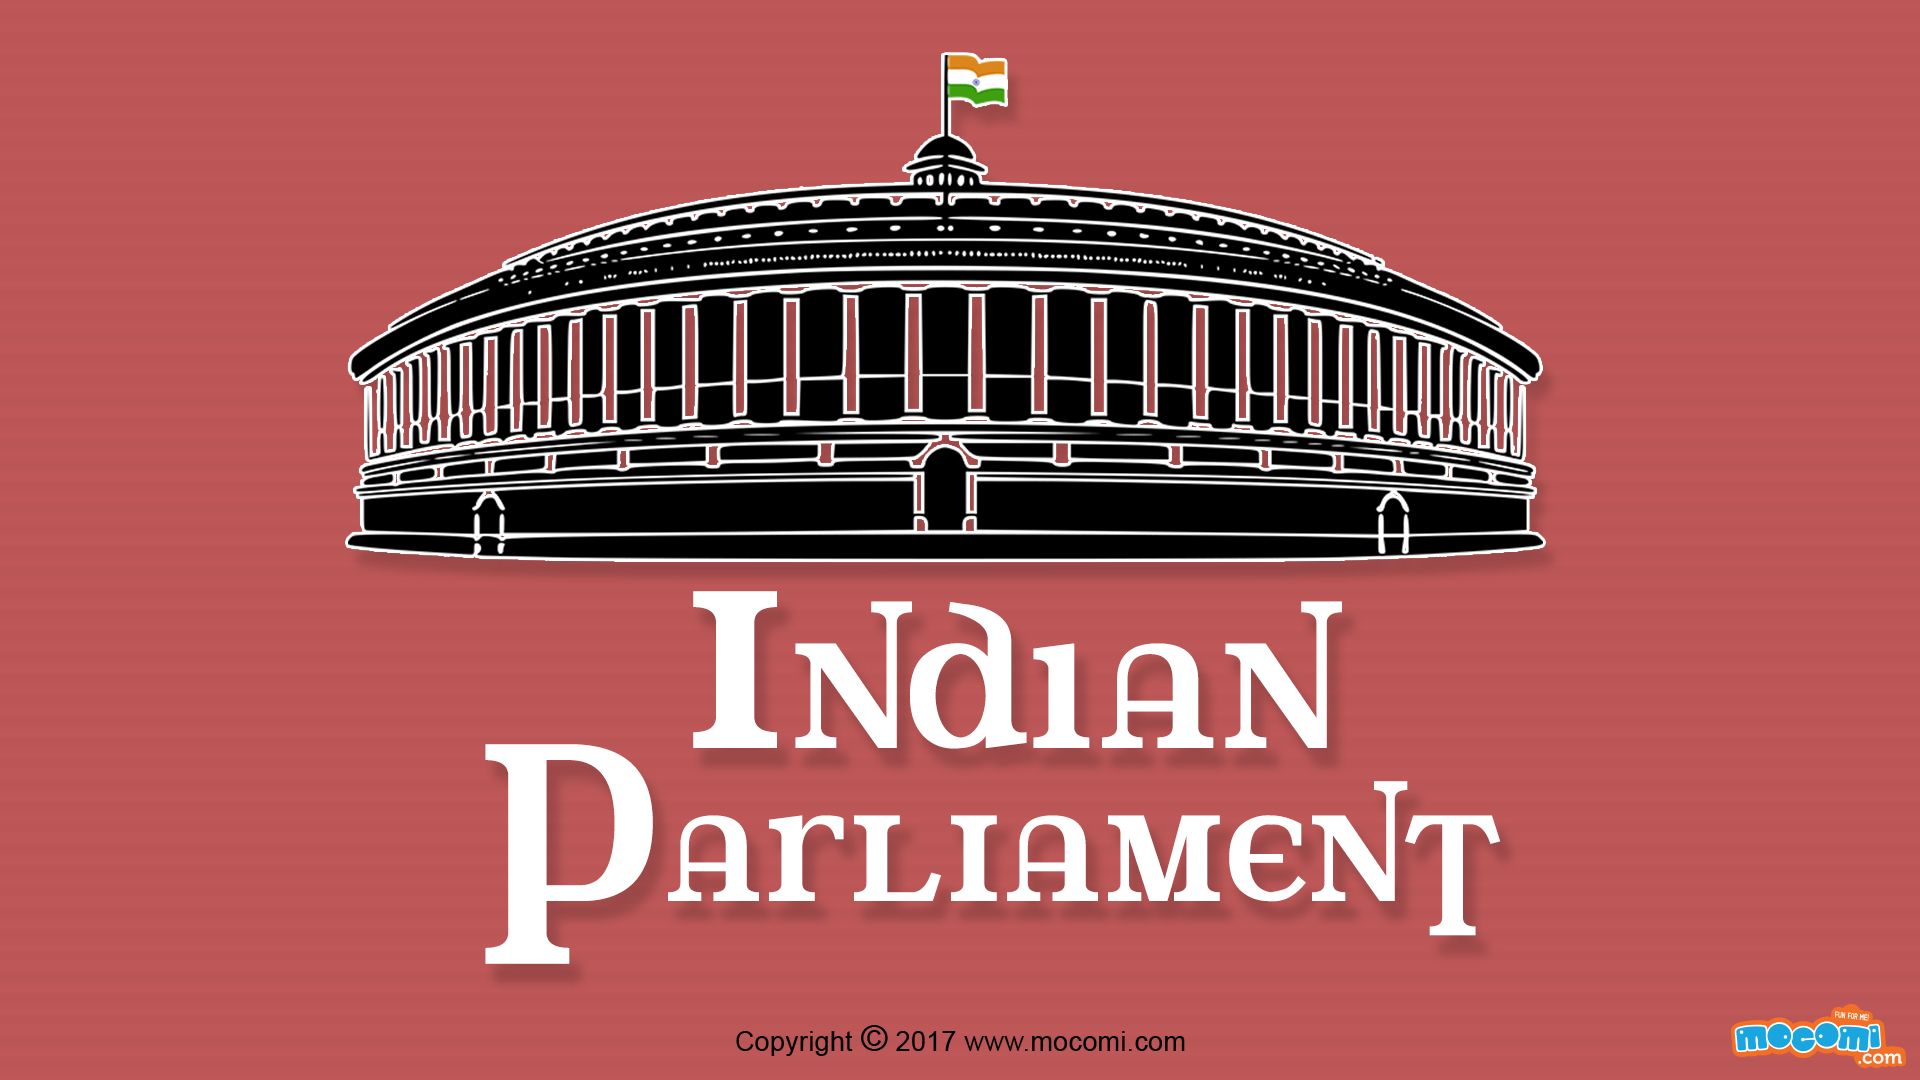 Indian Parliament Images - Free Download on Freepik